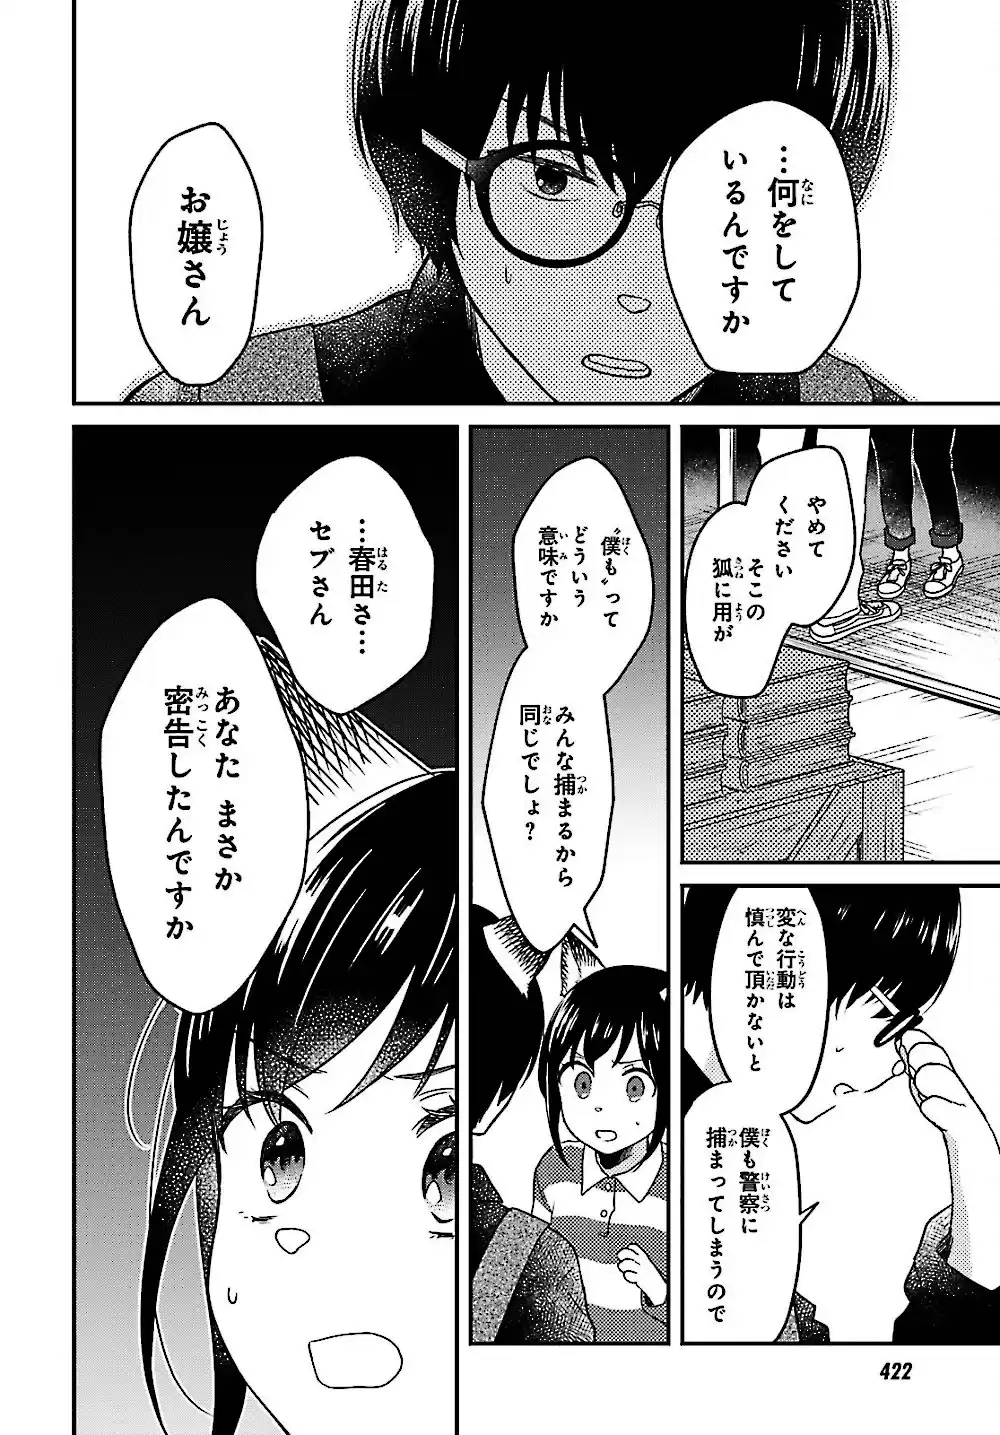 29 Manga E6is